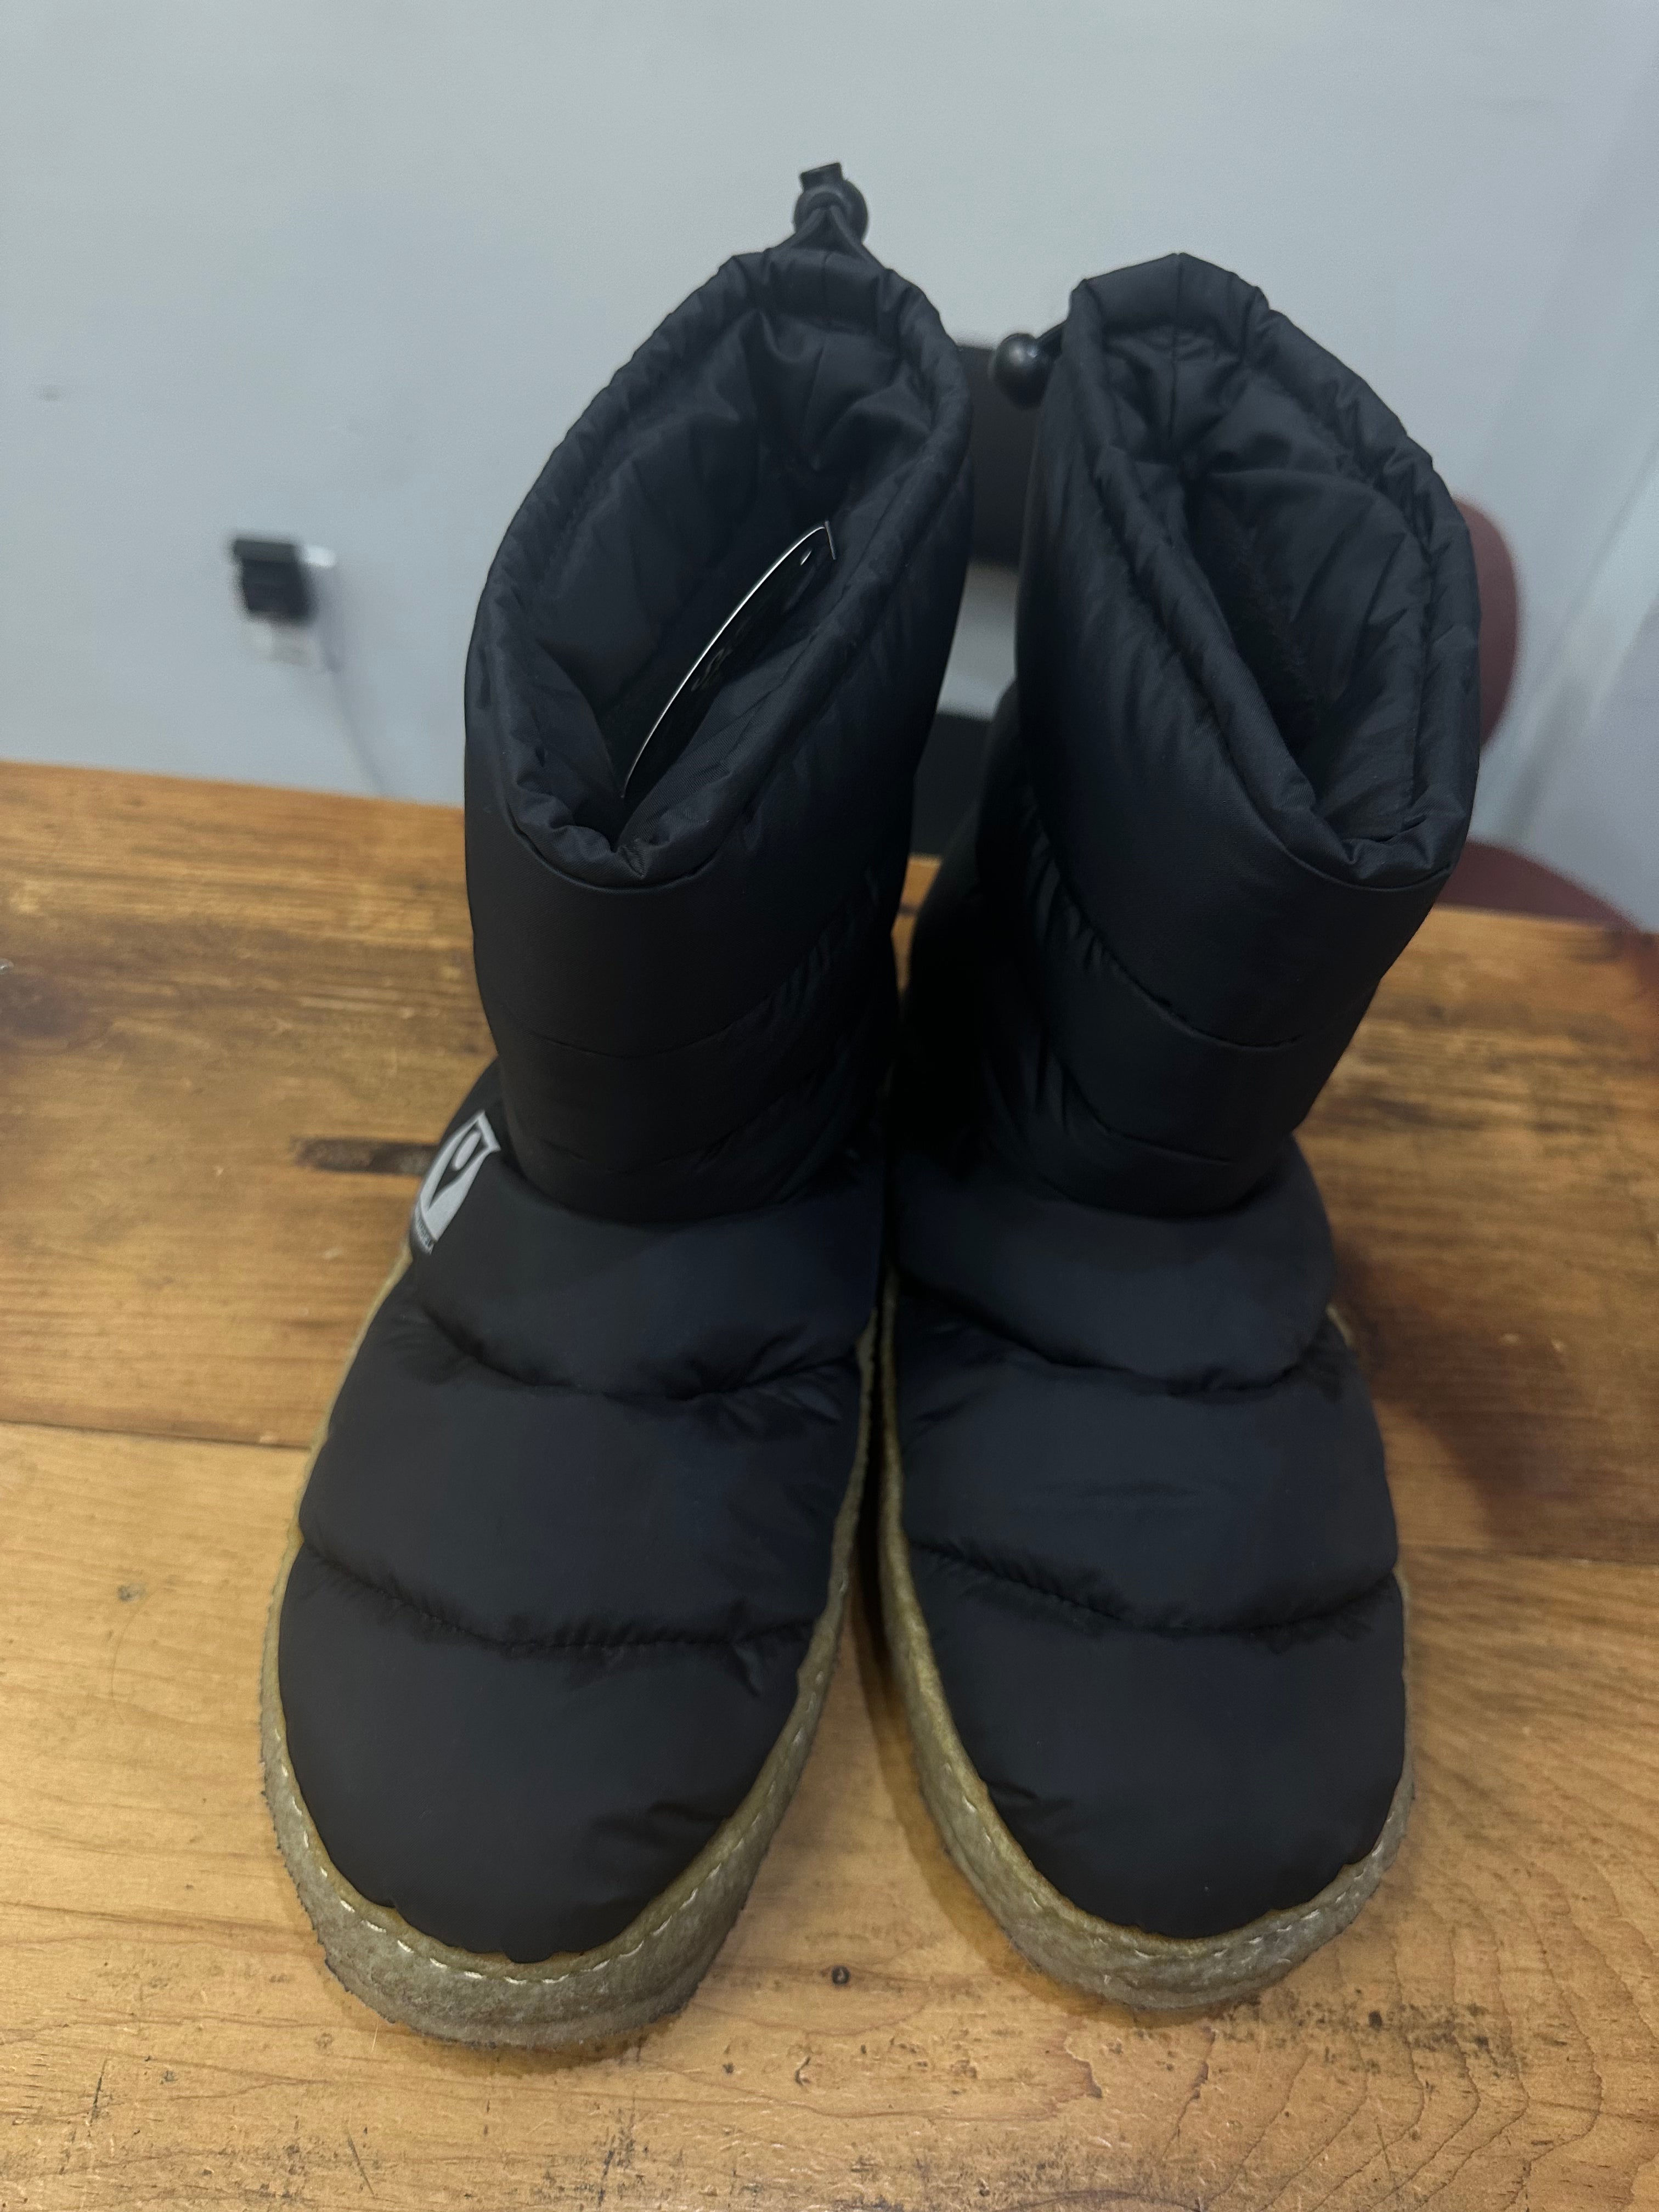 Maison Margiela Puffer Boots Size 10